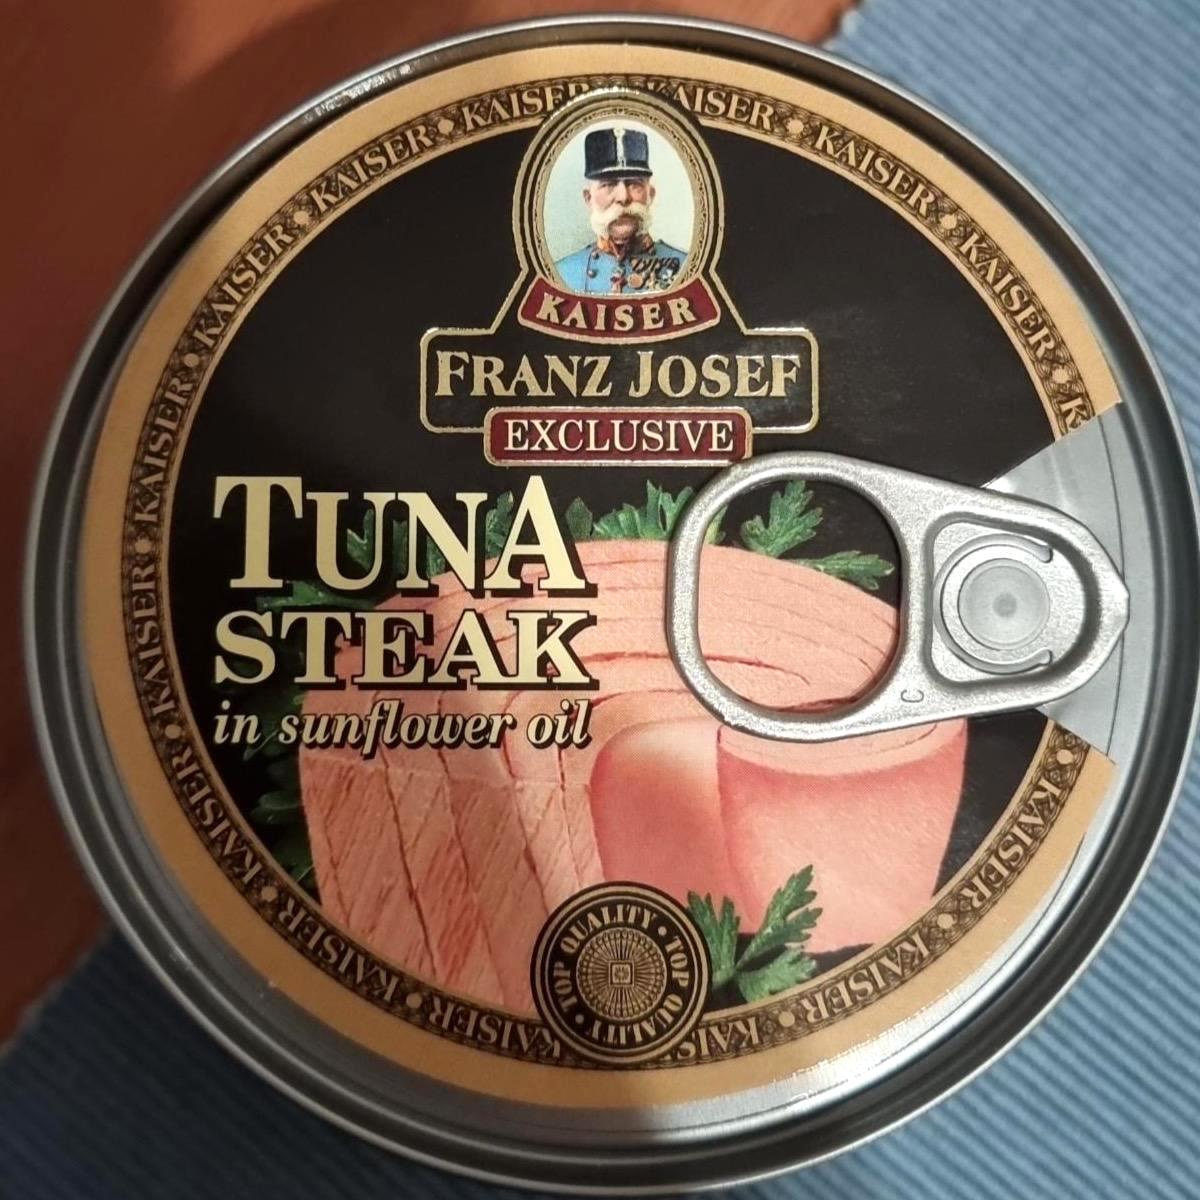 Képek - Tonhal steak napraforgóolajban Kaiser Franz Josef Exclusive